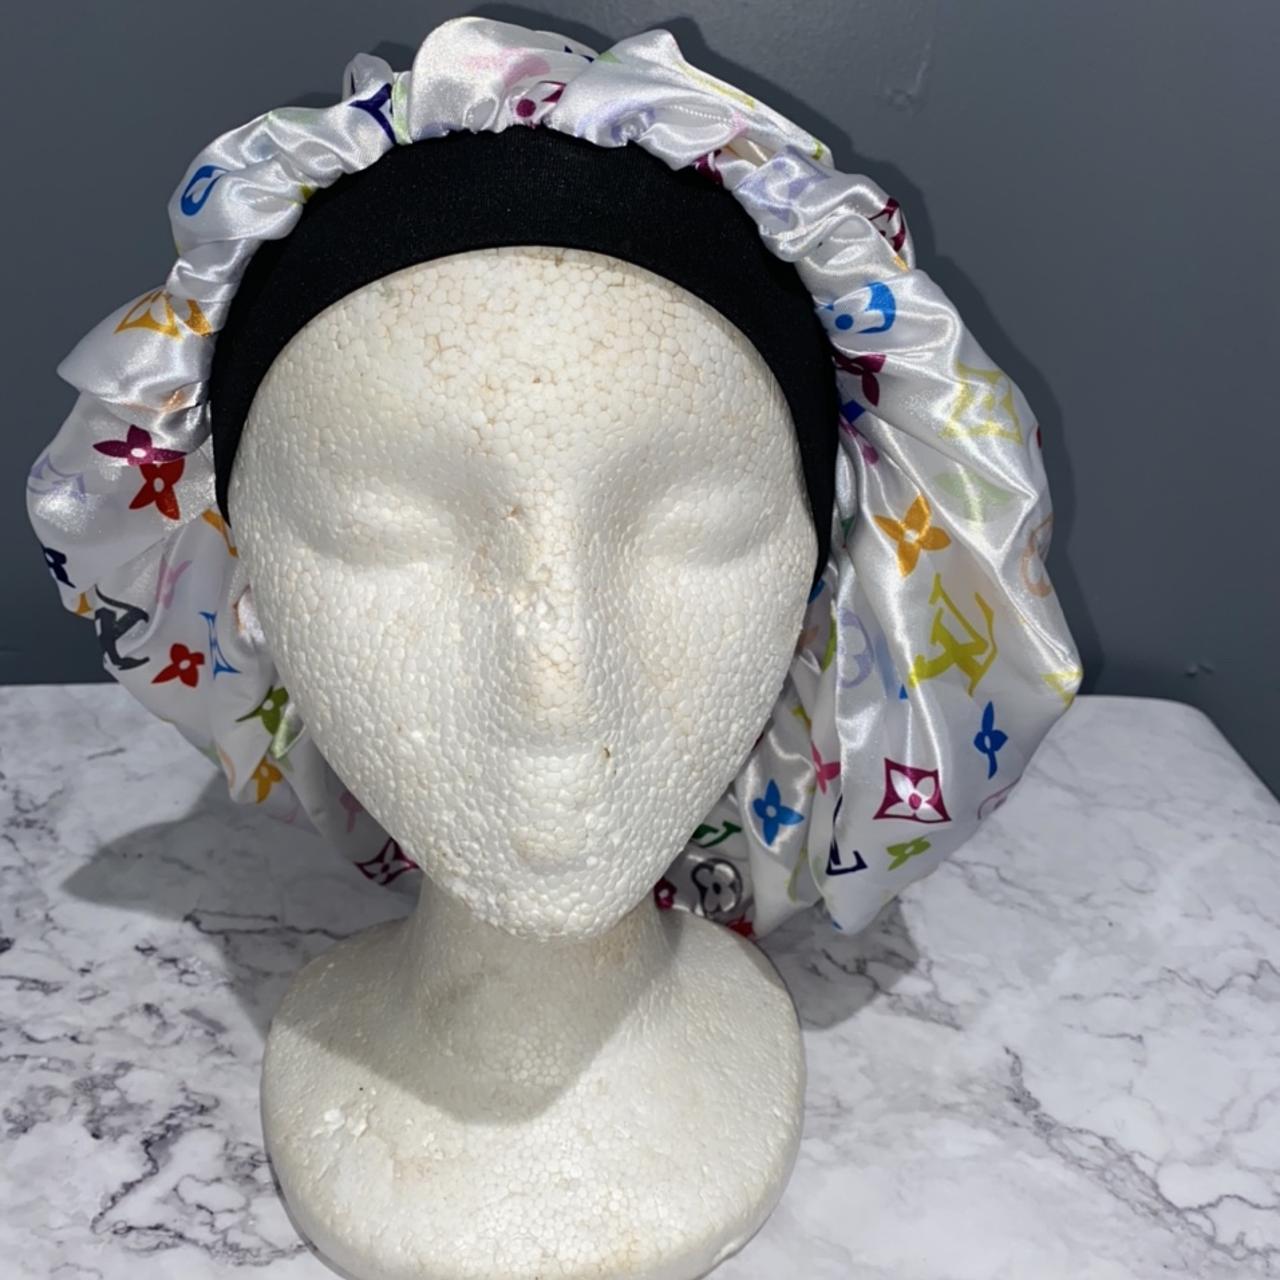 Medium satin stylish hair bonnet with a black band - Depop